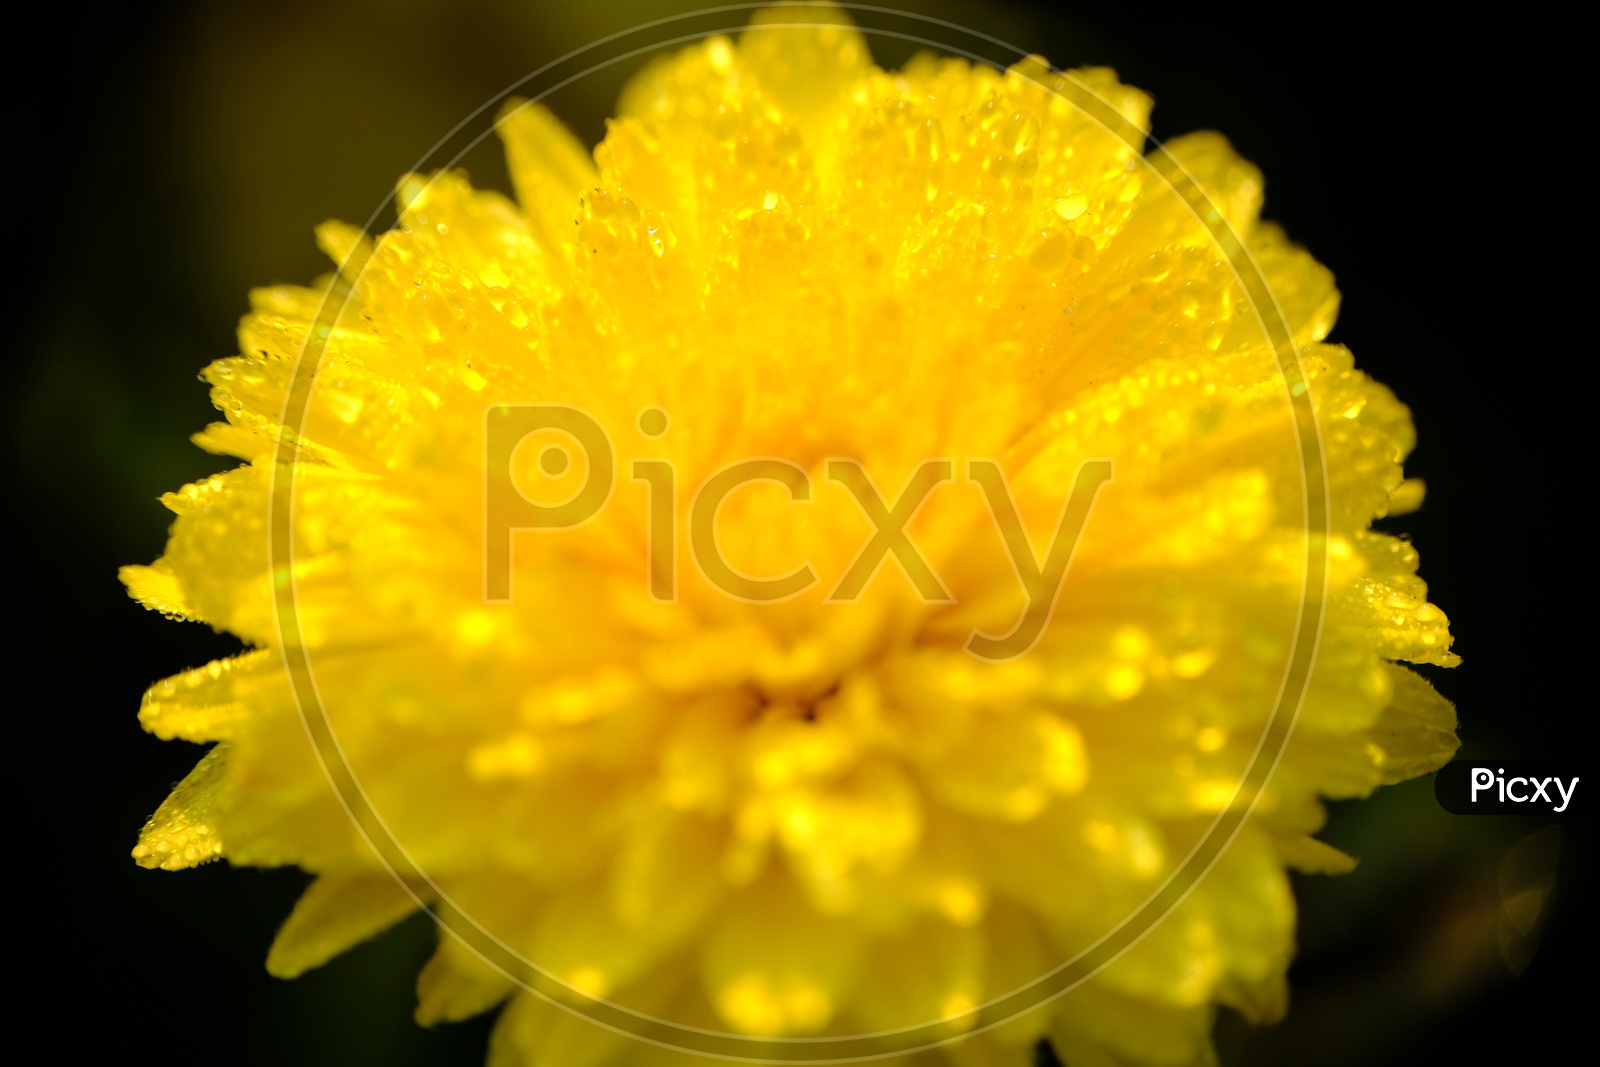 Chrysanthemums flower or Guldaudi Flower